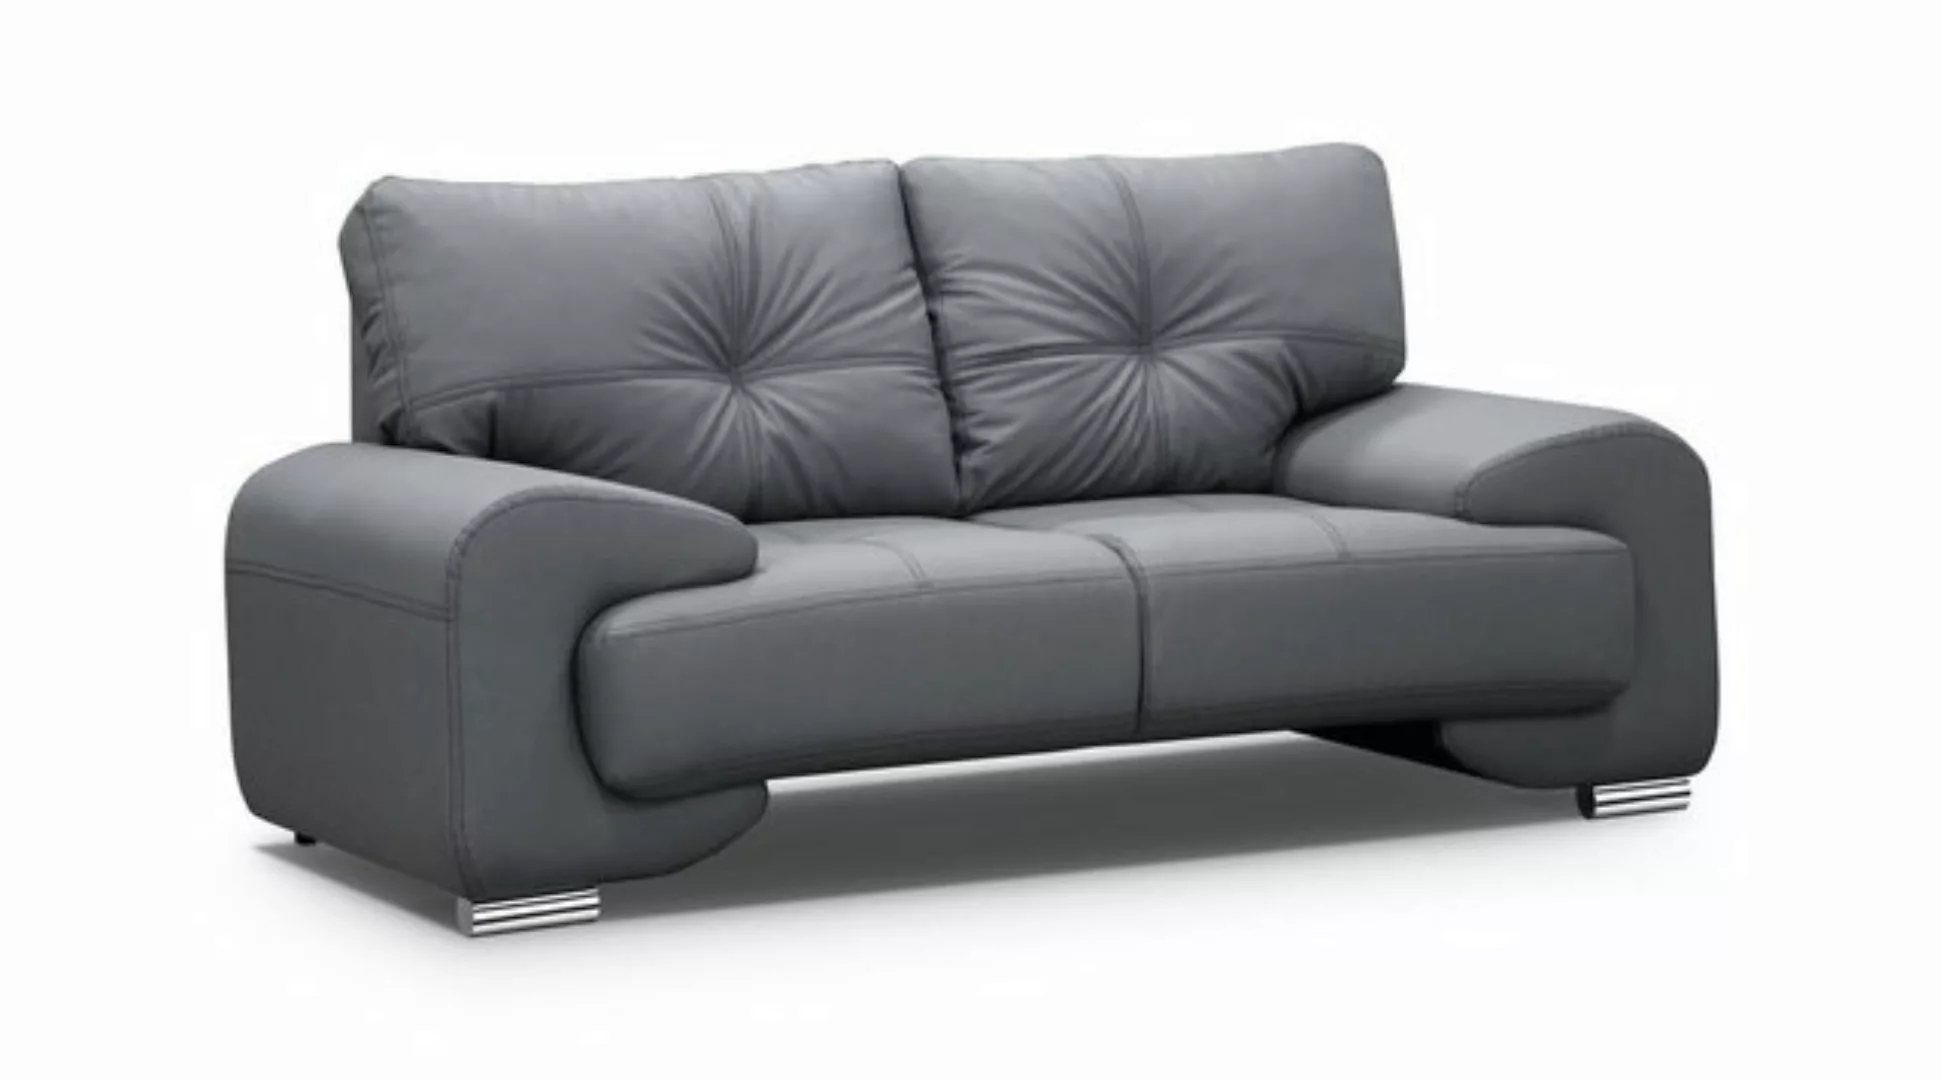 Beautysofa 2-Sitzer Zweisitzer Sofa Couch OMEGA Neu günstig online kaufen